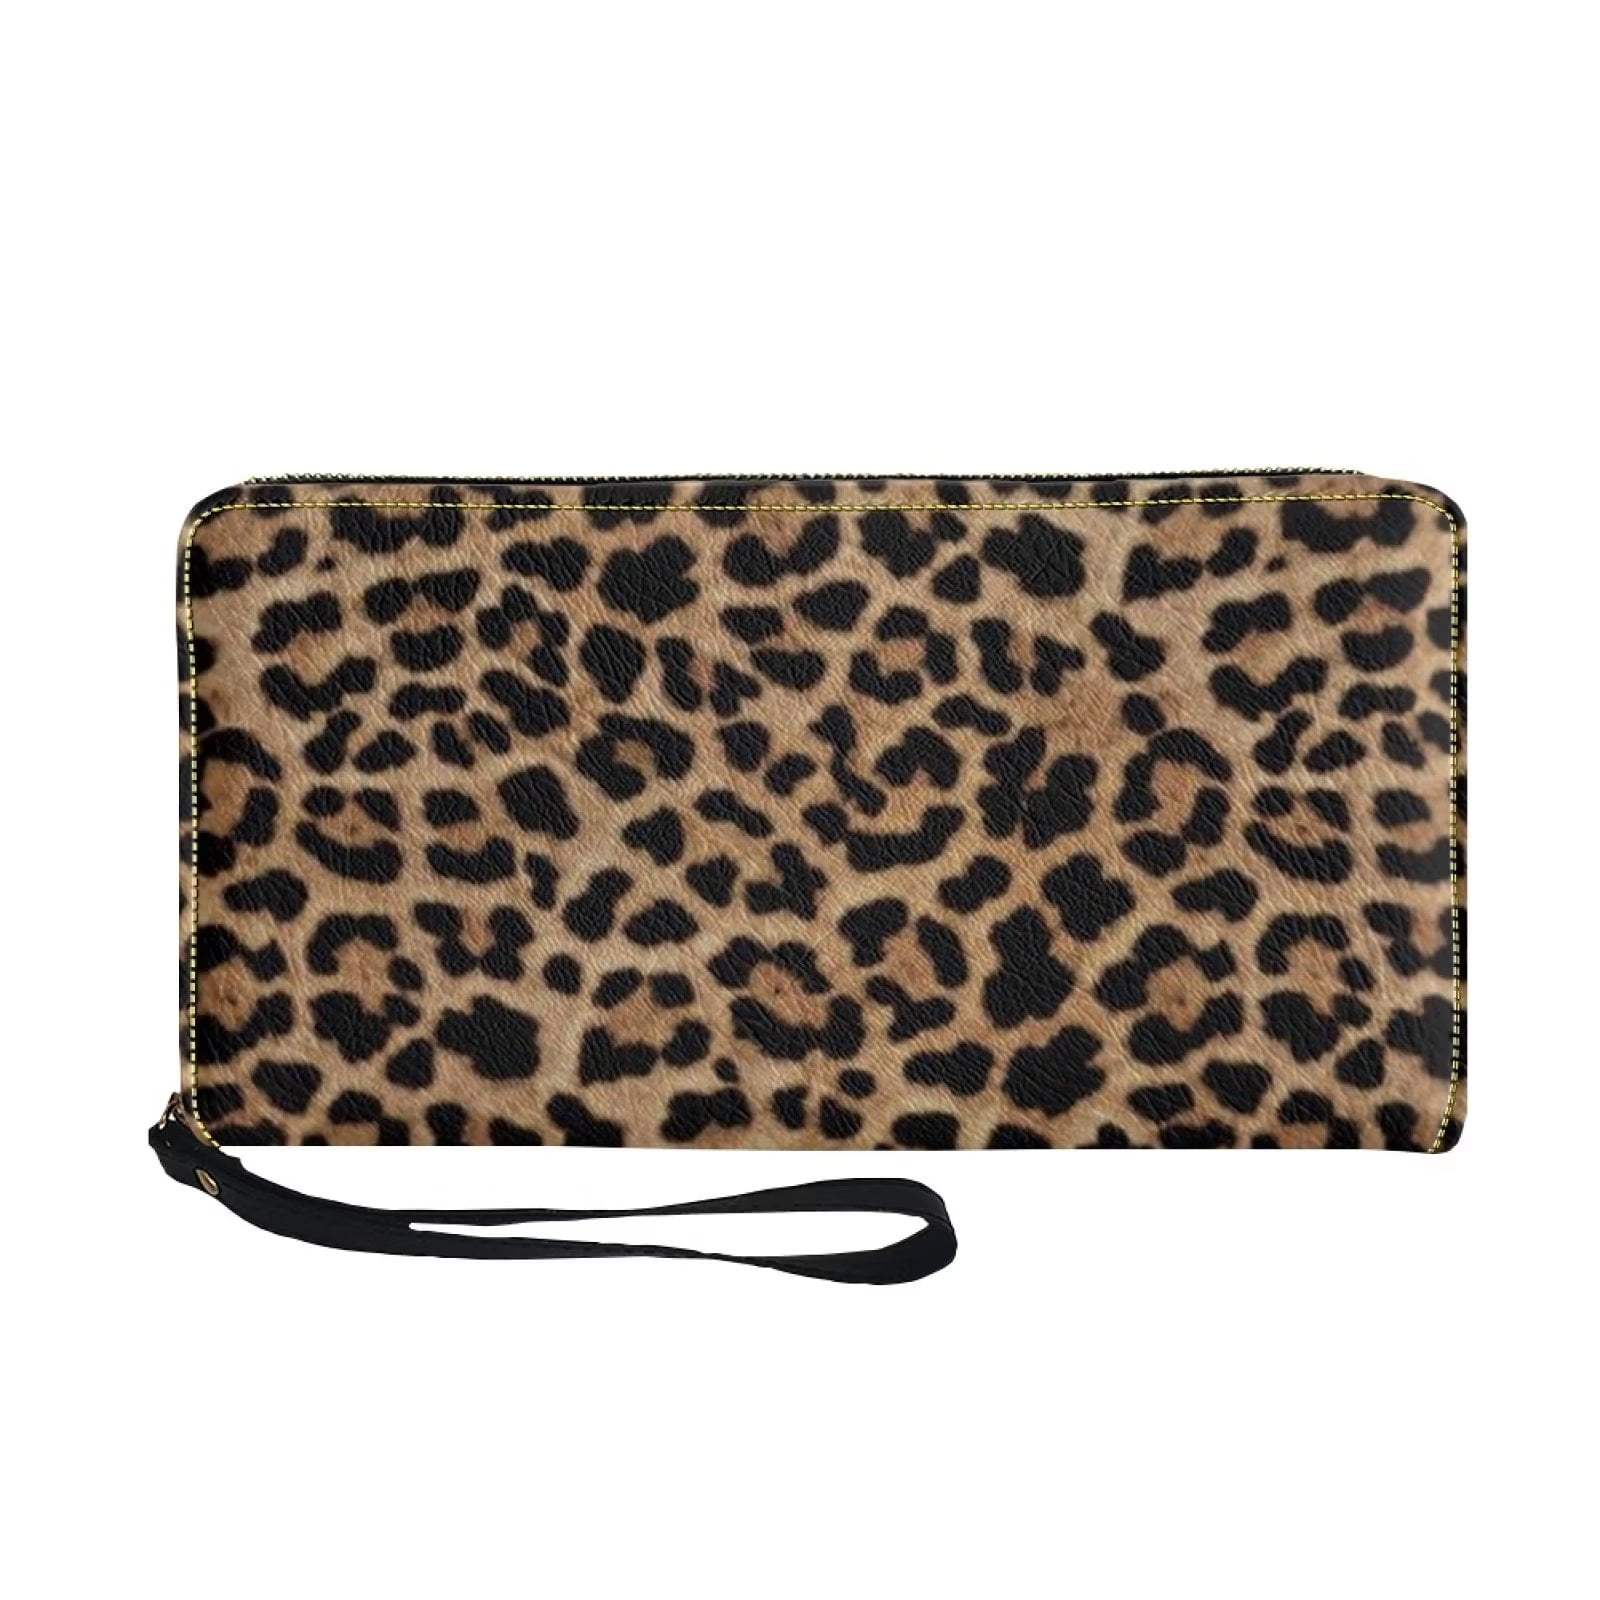 Gold Leopard Print Bag - Beaded Handbag - Animal Print Purse - Lulus